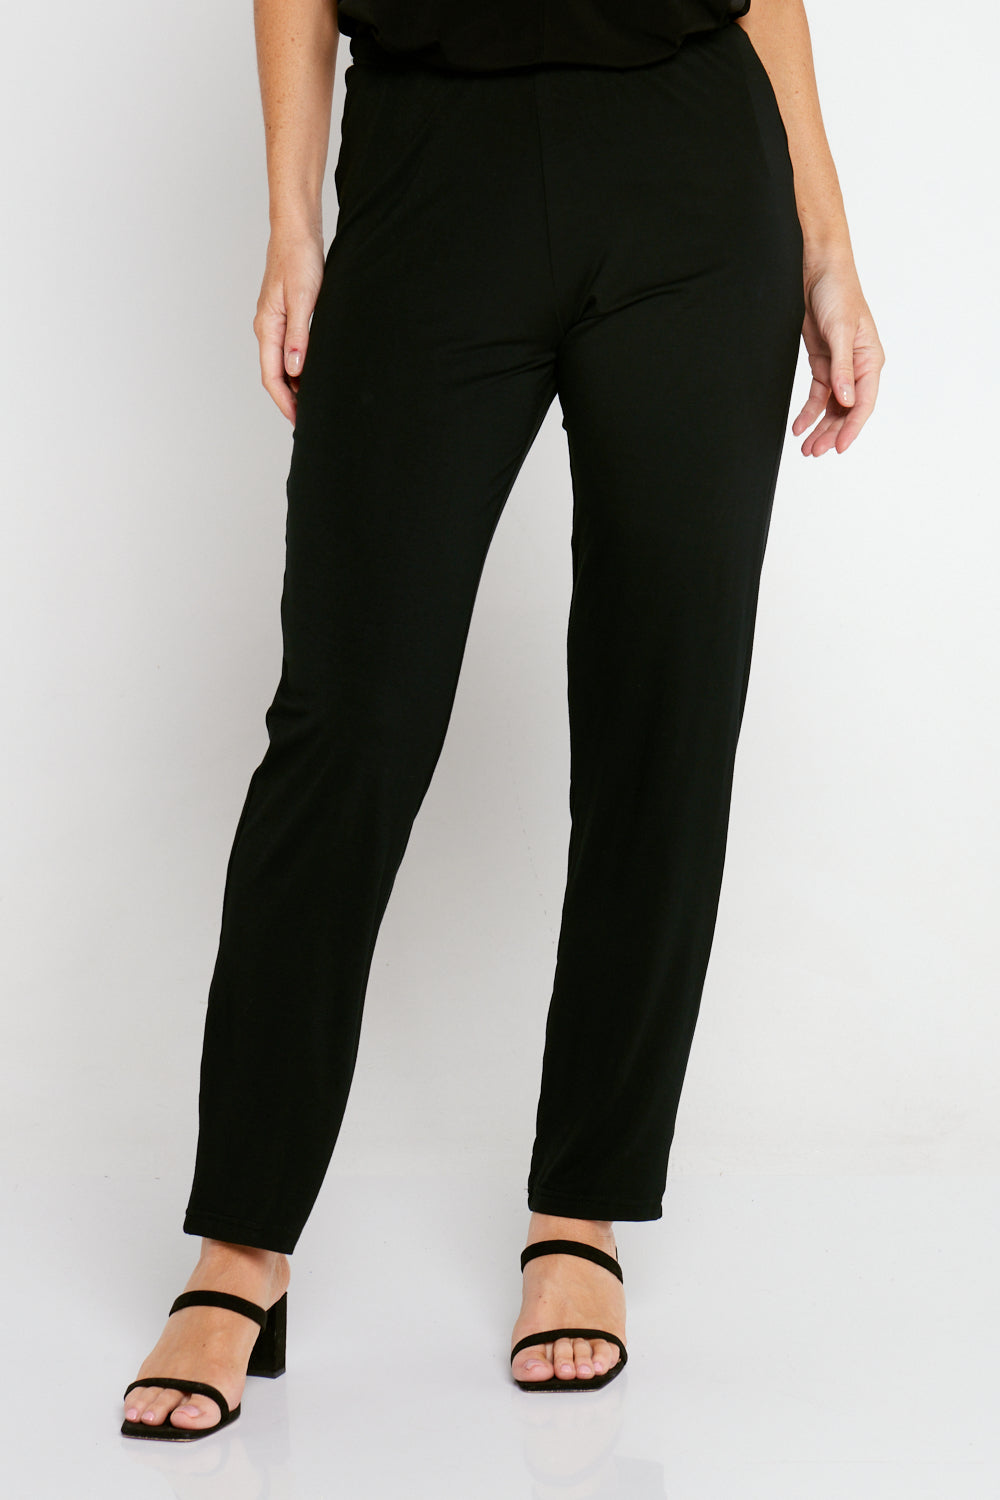 Gianna Bamboo Pants - Black – TULIO Fashion